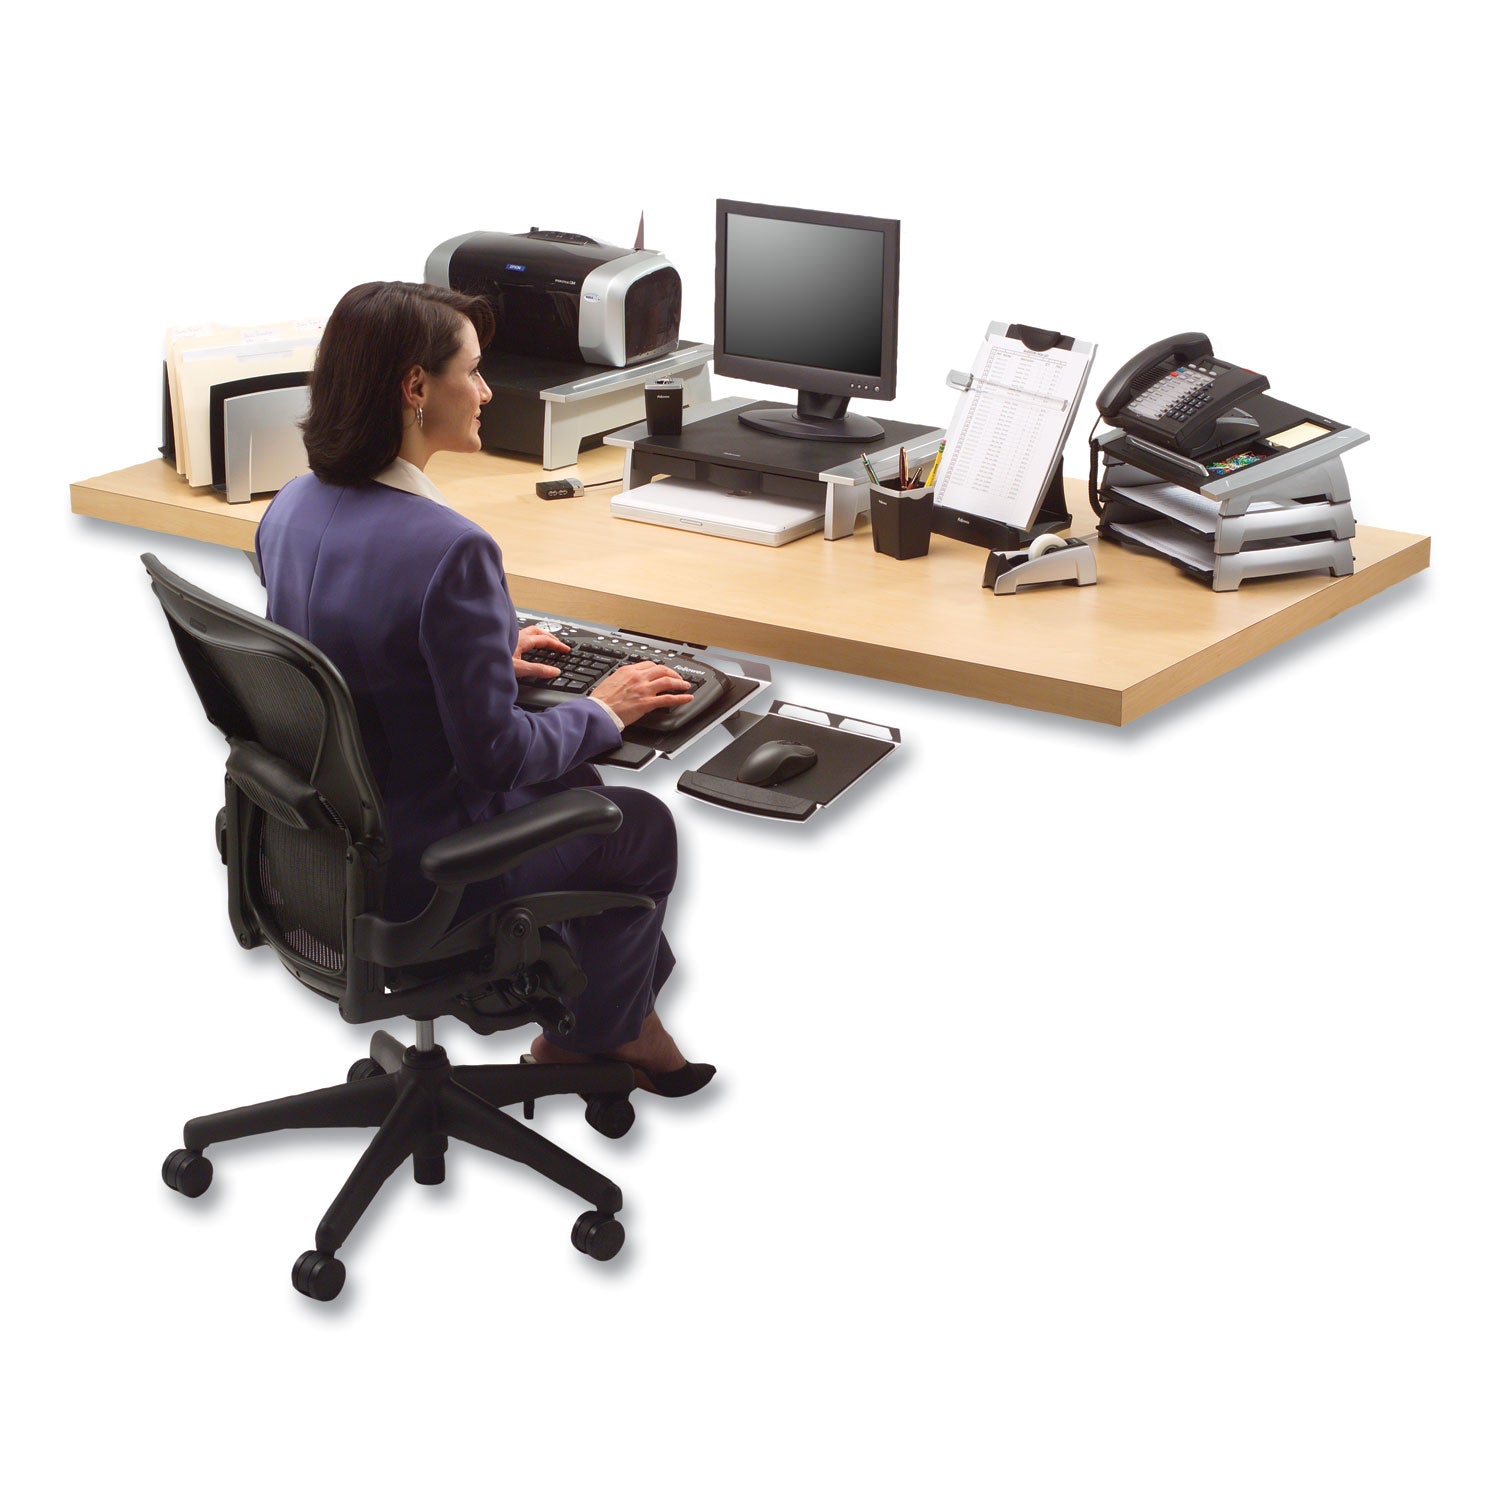 Office Suites Printer/Machine Stand, 21.25 x 18.06 x 5.25, Black/Silver - 